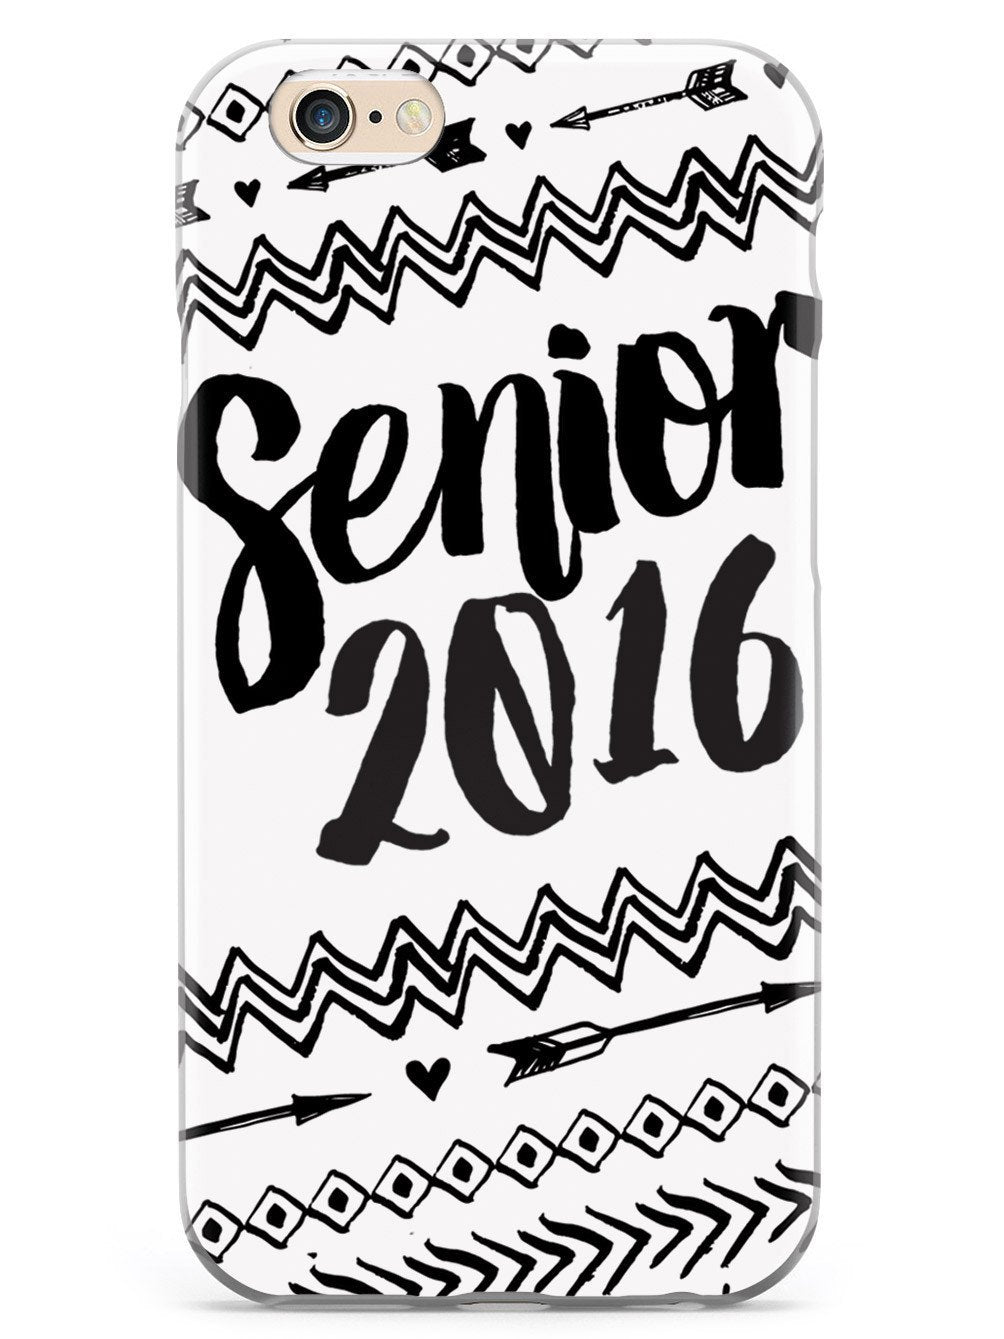 Senior 2016 - Black Case